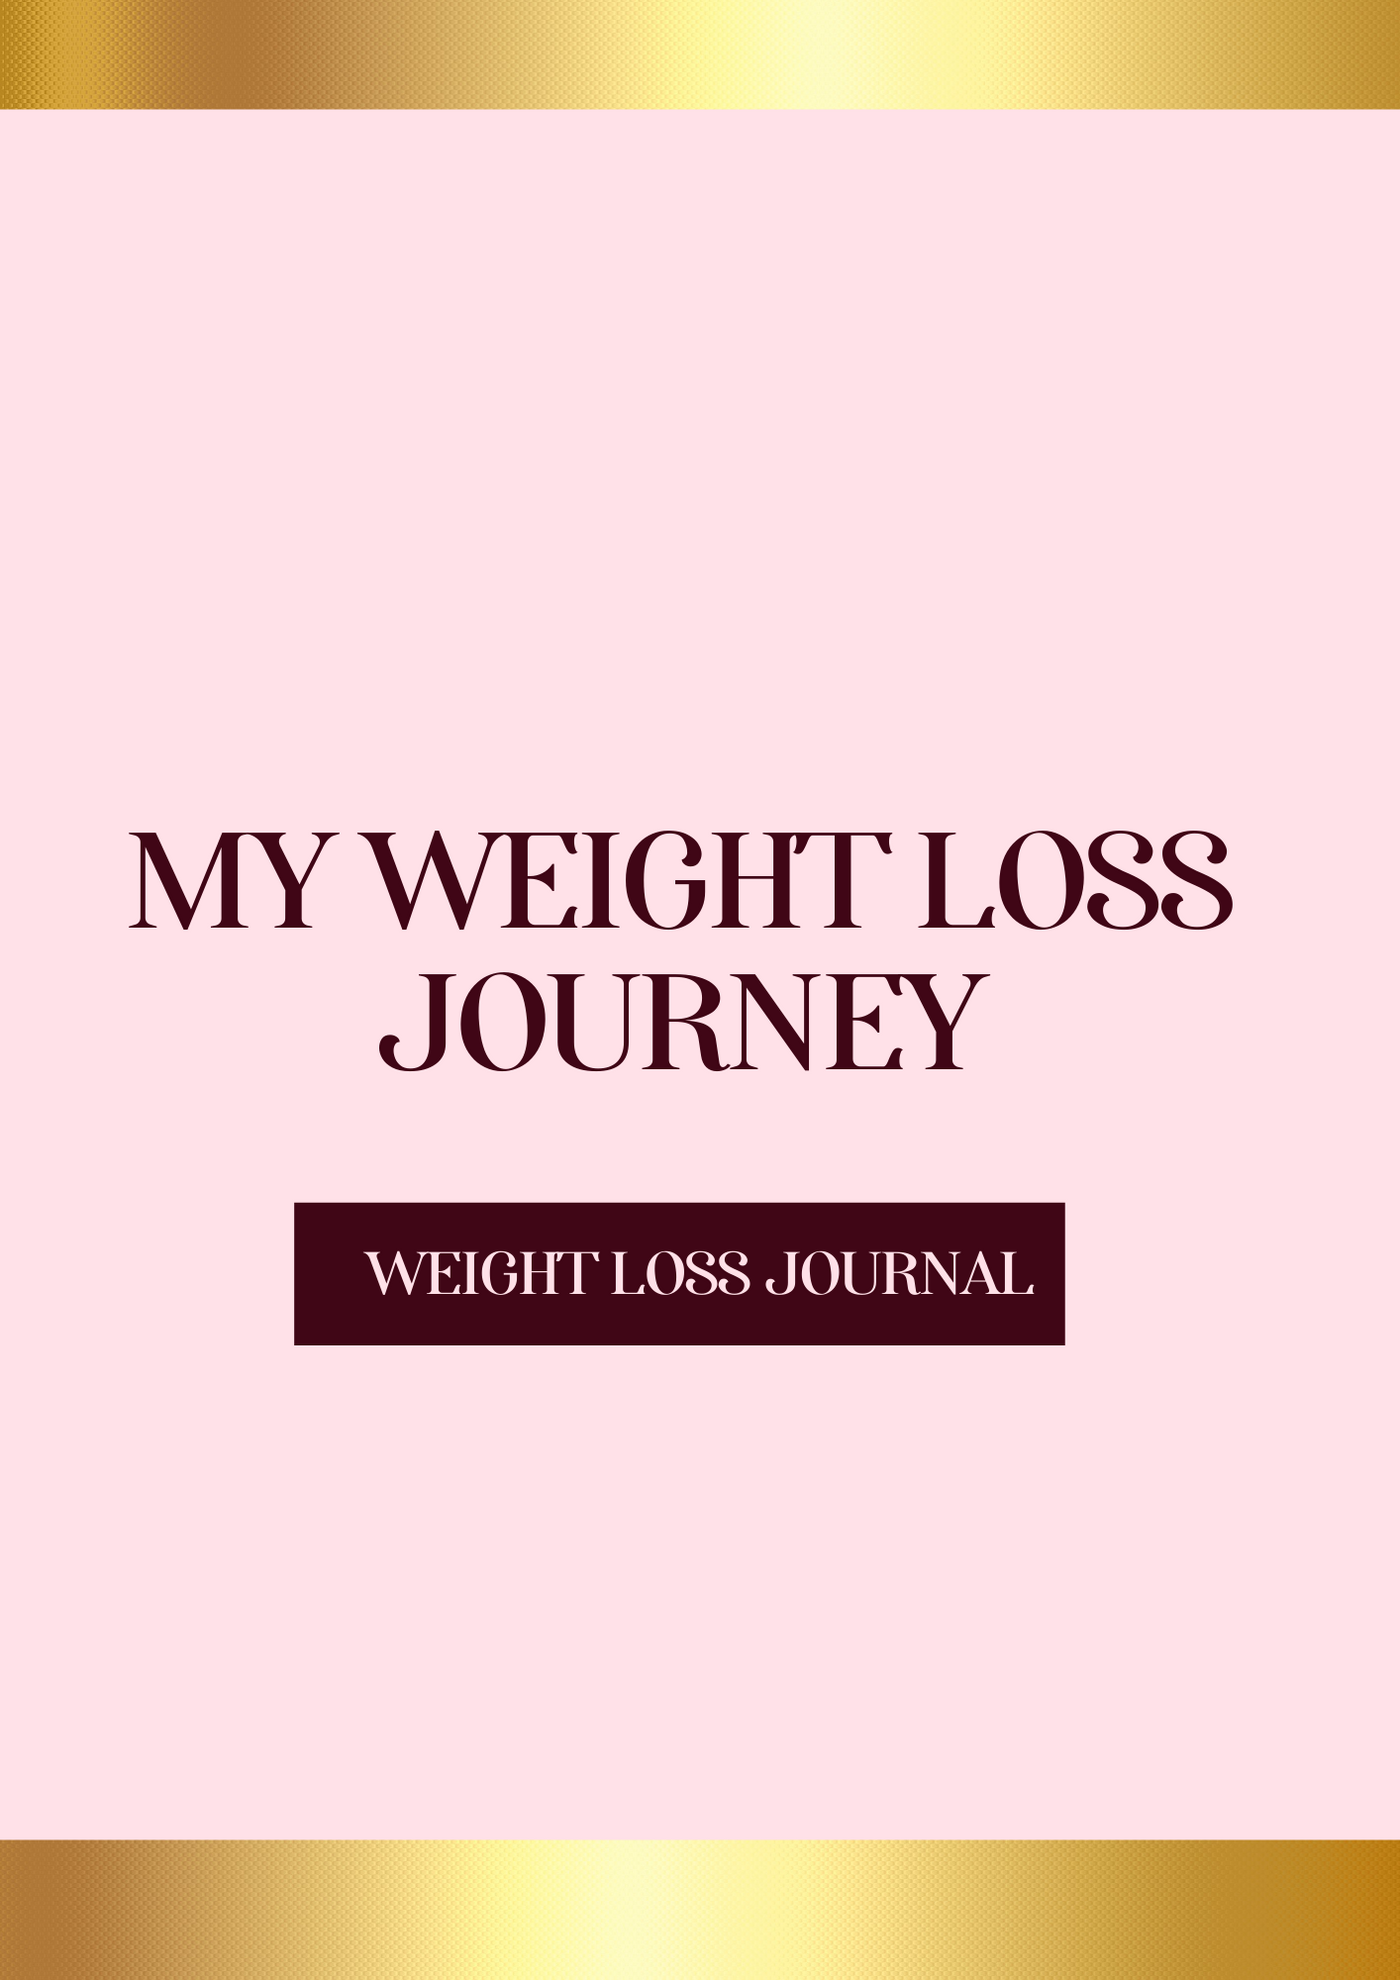 Weight Loss Journal (Editable)